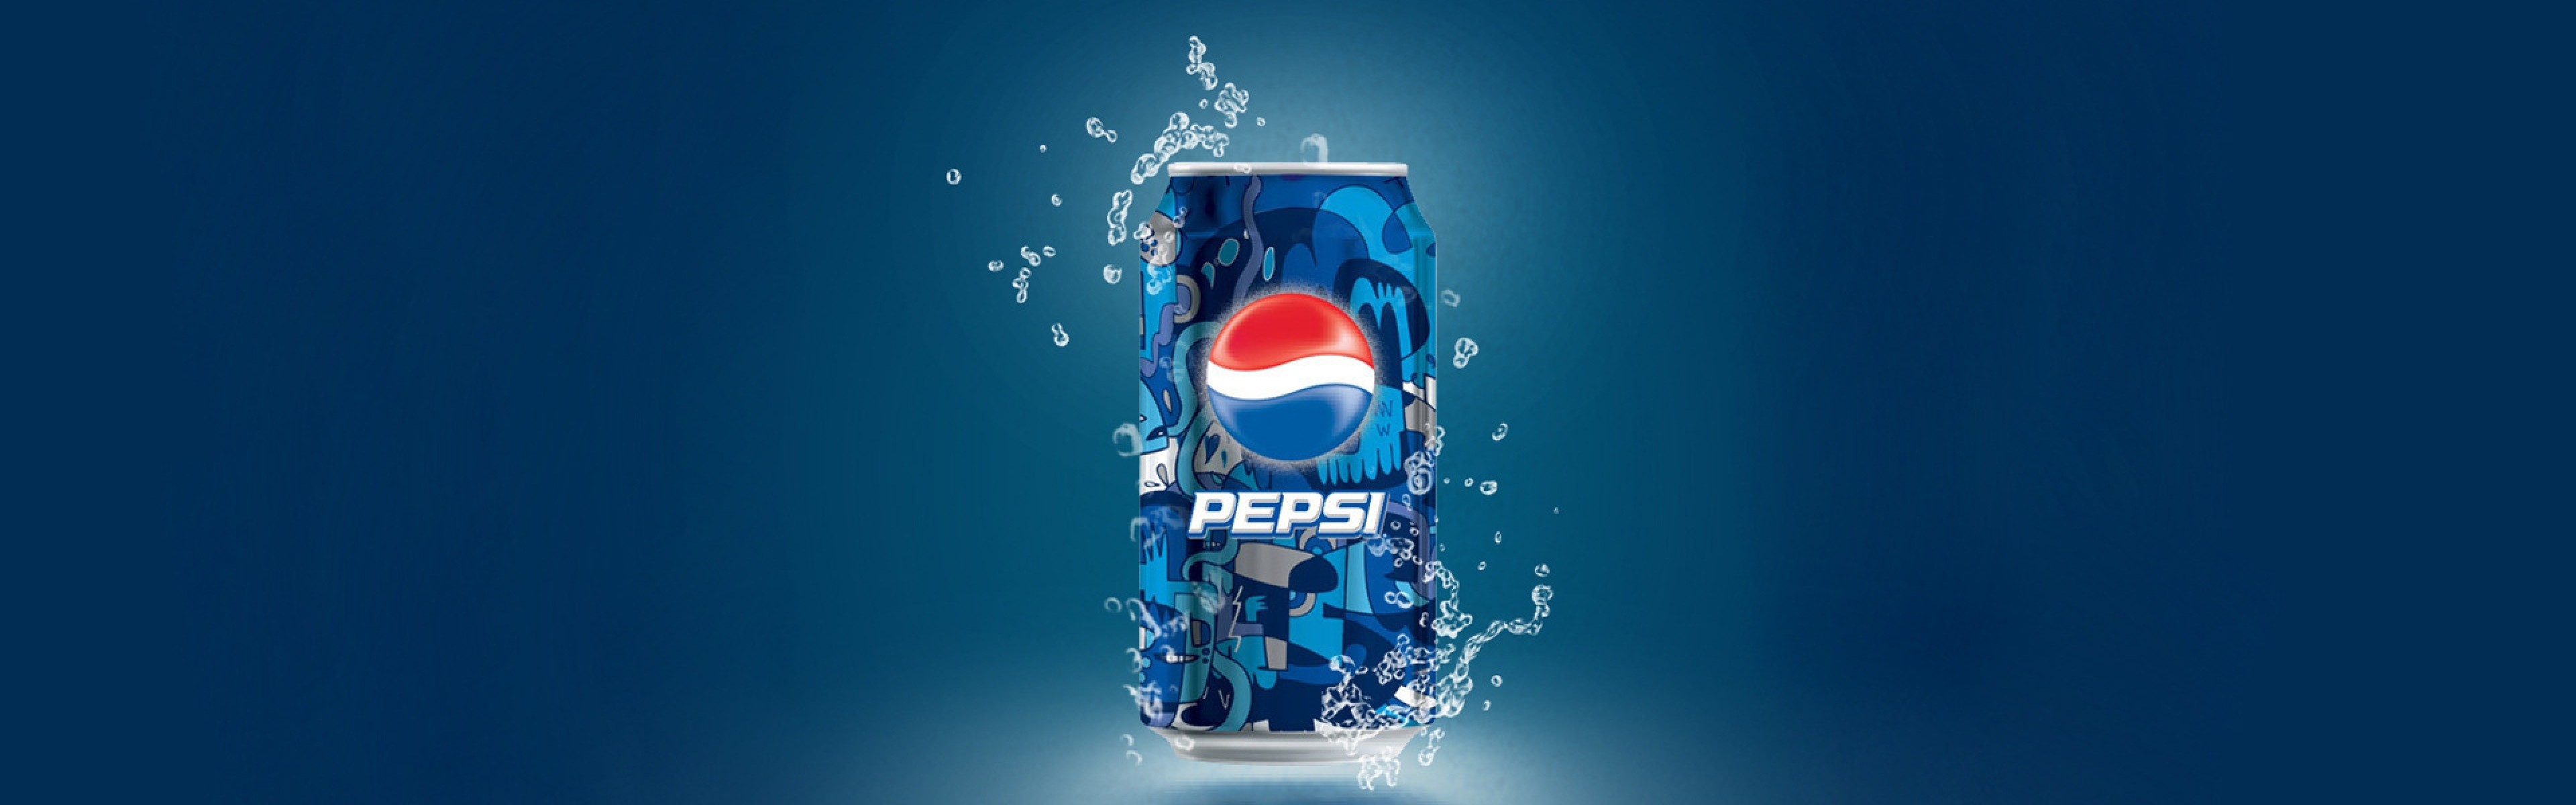 D Logo Pepsi Wallpaper By Boopuffywallpapers On Deviantart 3840x1200